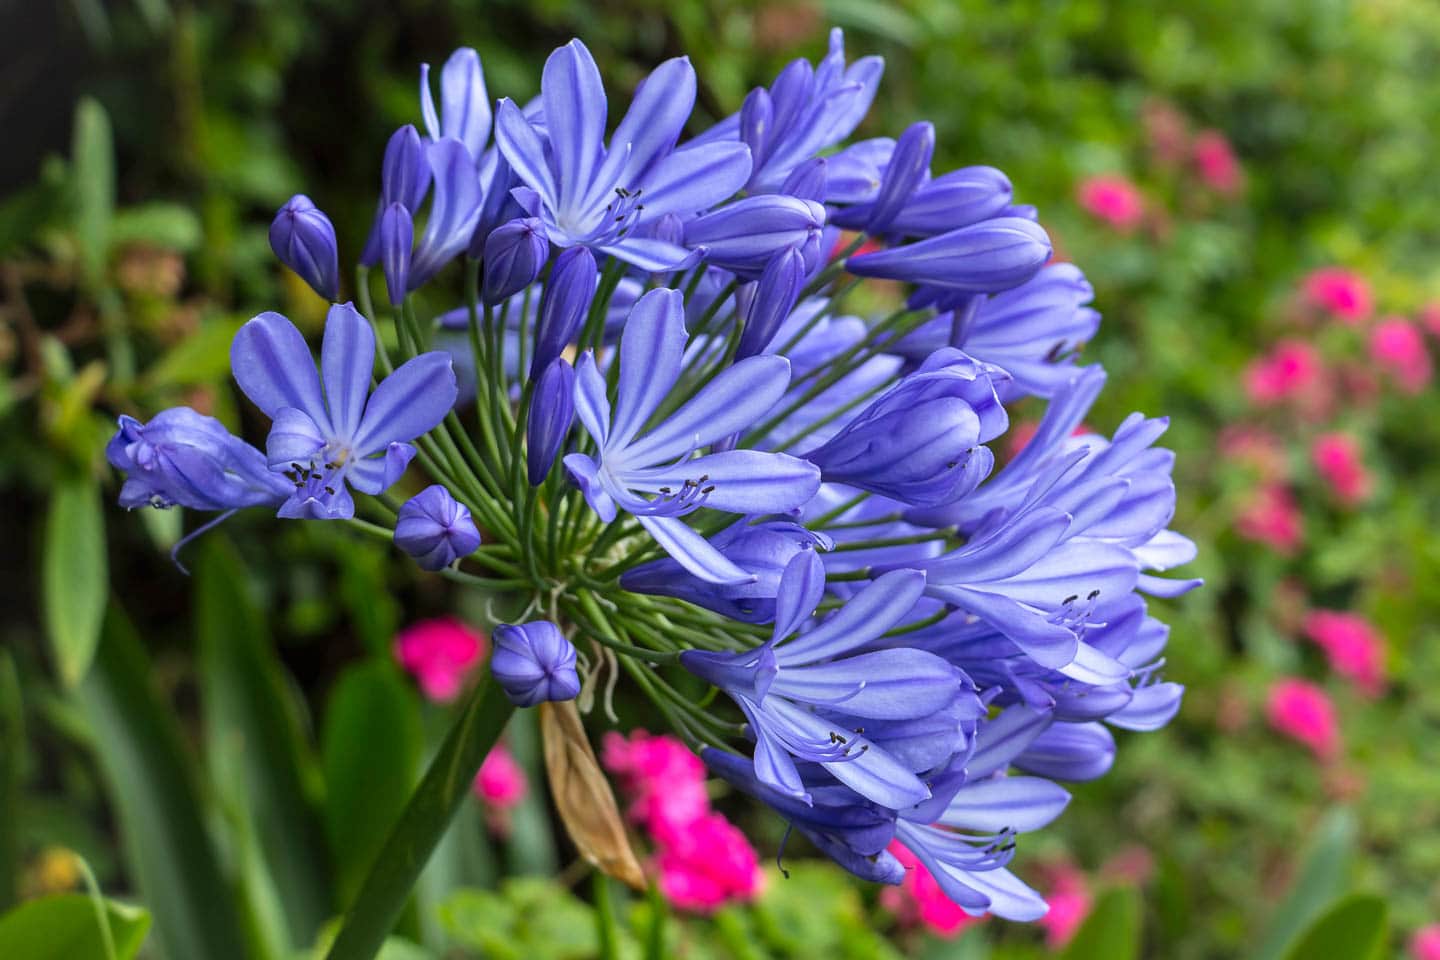 Blue agapanthus flower